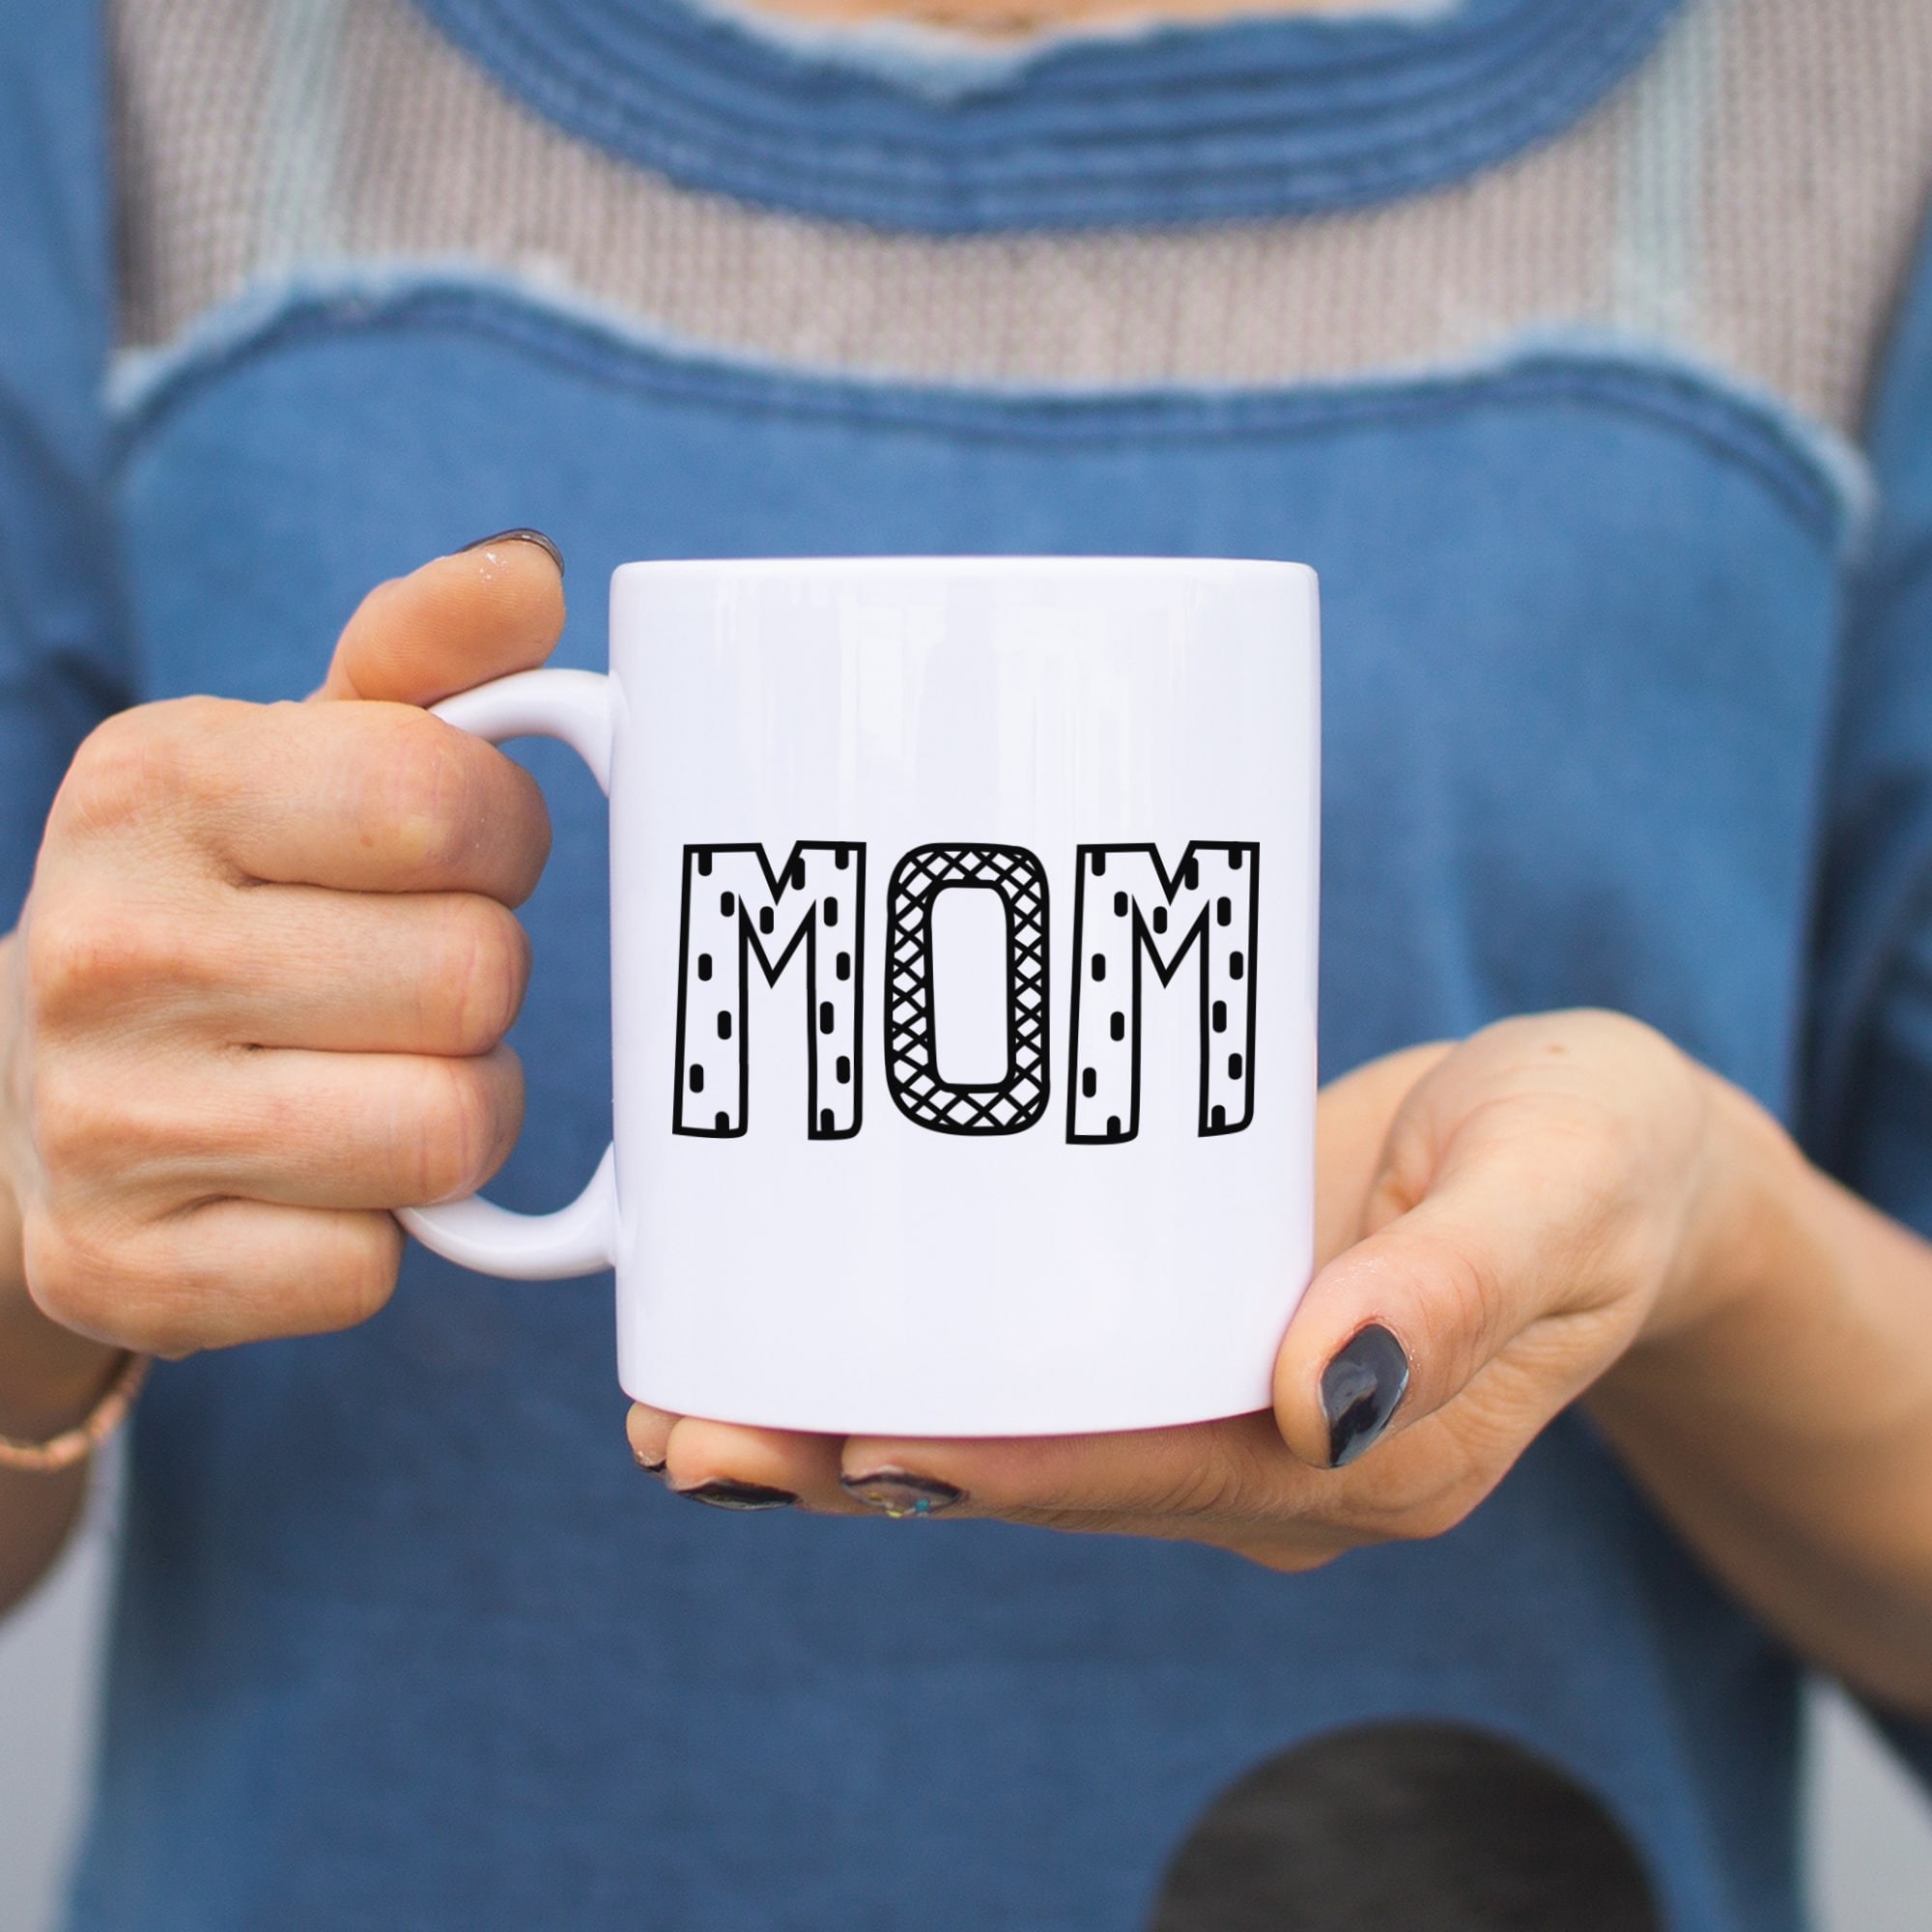 https://ak1.ostkcdn.com/images/products/is/images/direct/46dffb76f135c1d11a1d0aae32ad7527eab55cda/Cute-Ceramic-Coffee-Mug-for-Mom---Dear-Mom-From-Your-Favorite-11oz-Mug-Cup.jpg